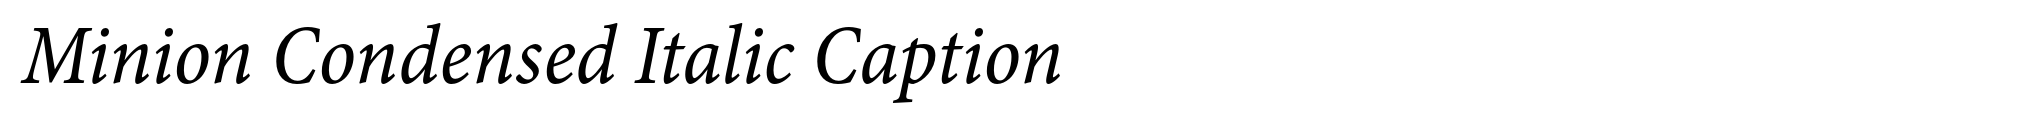 Minion Condensed Italic Caption image